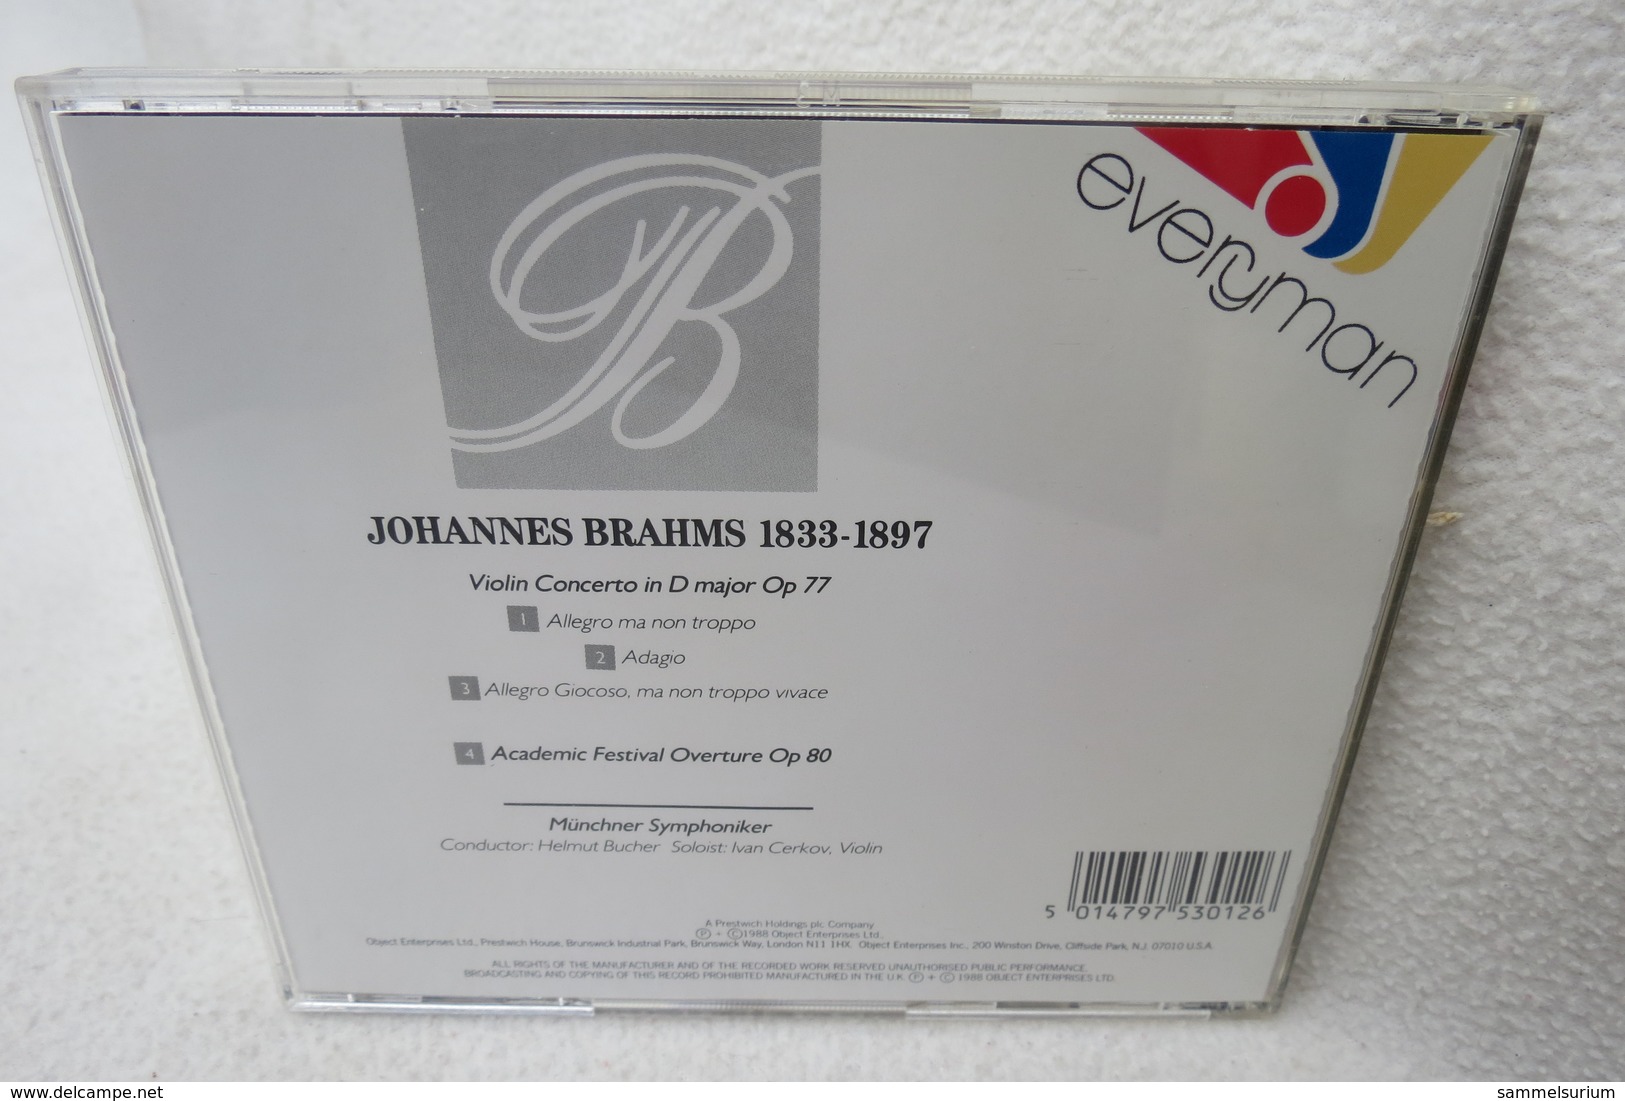 CD "Brahms" Violin Concerto - Klassik